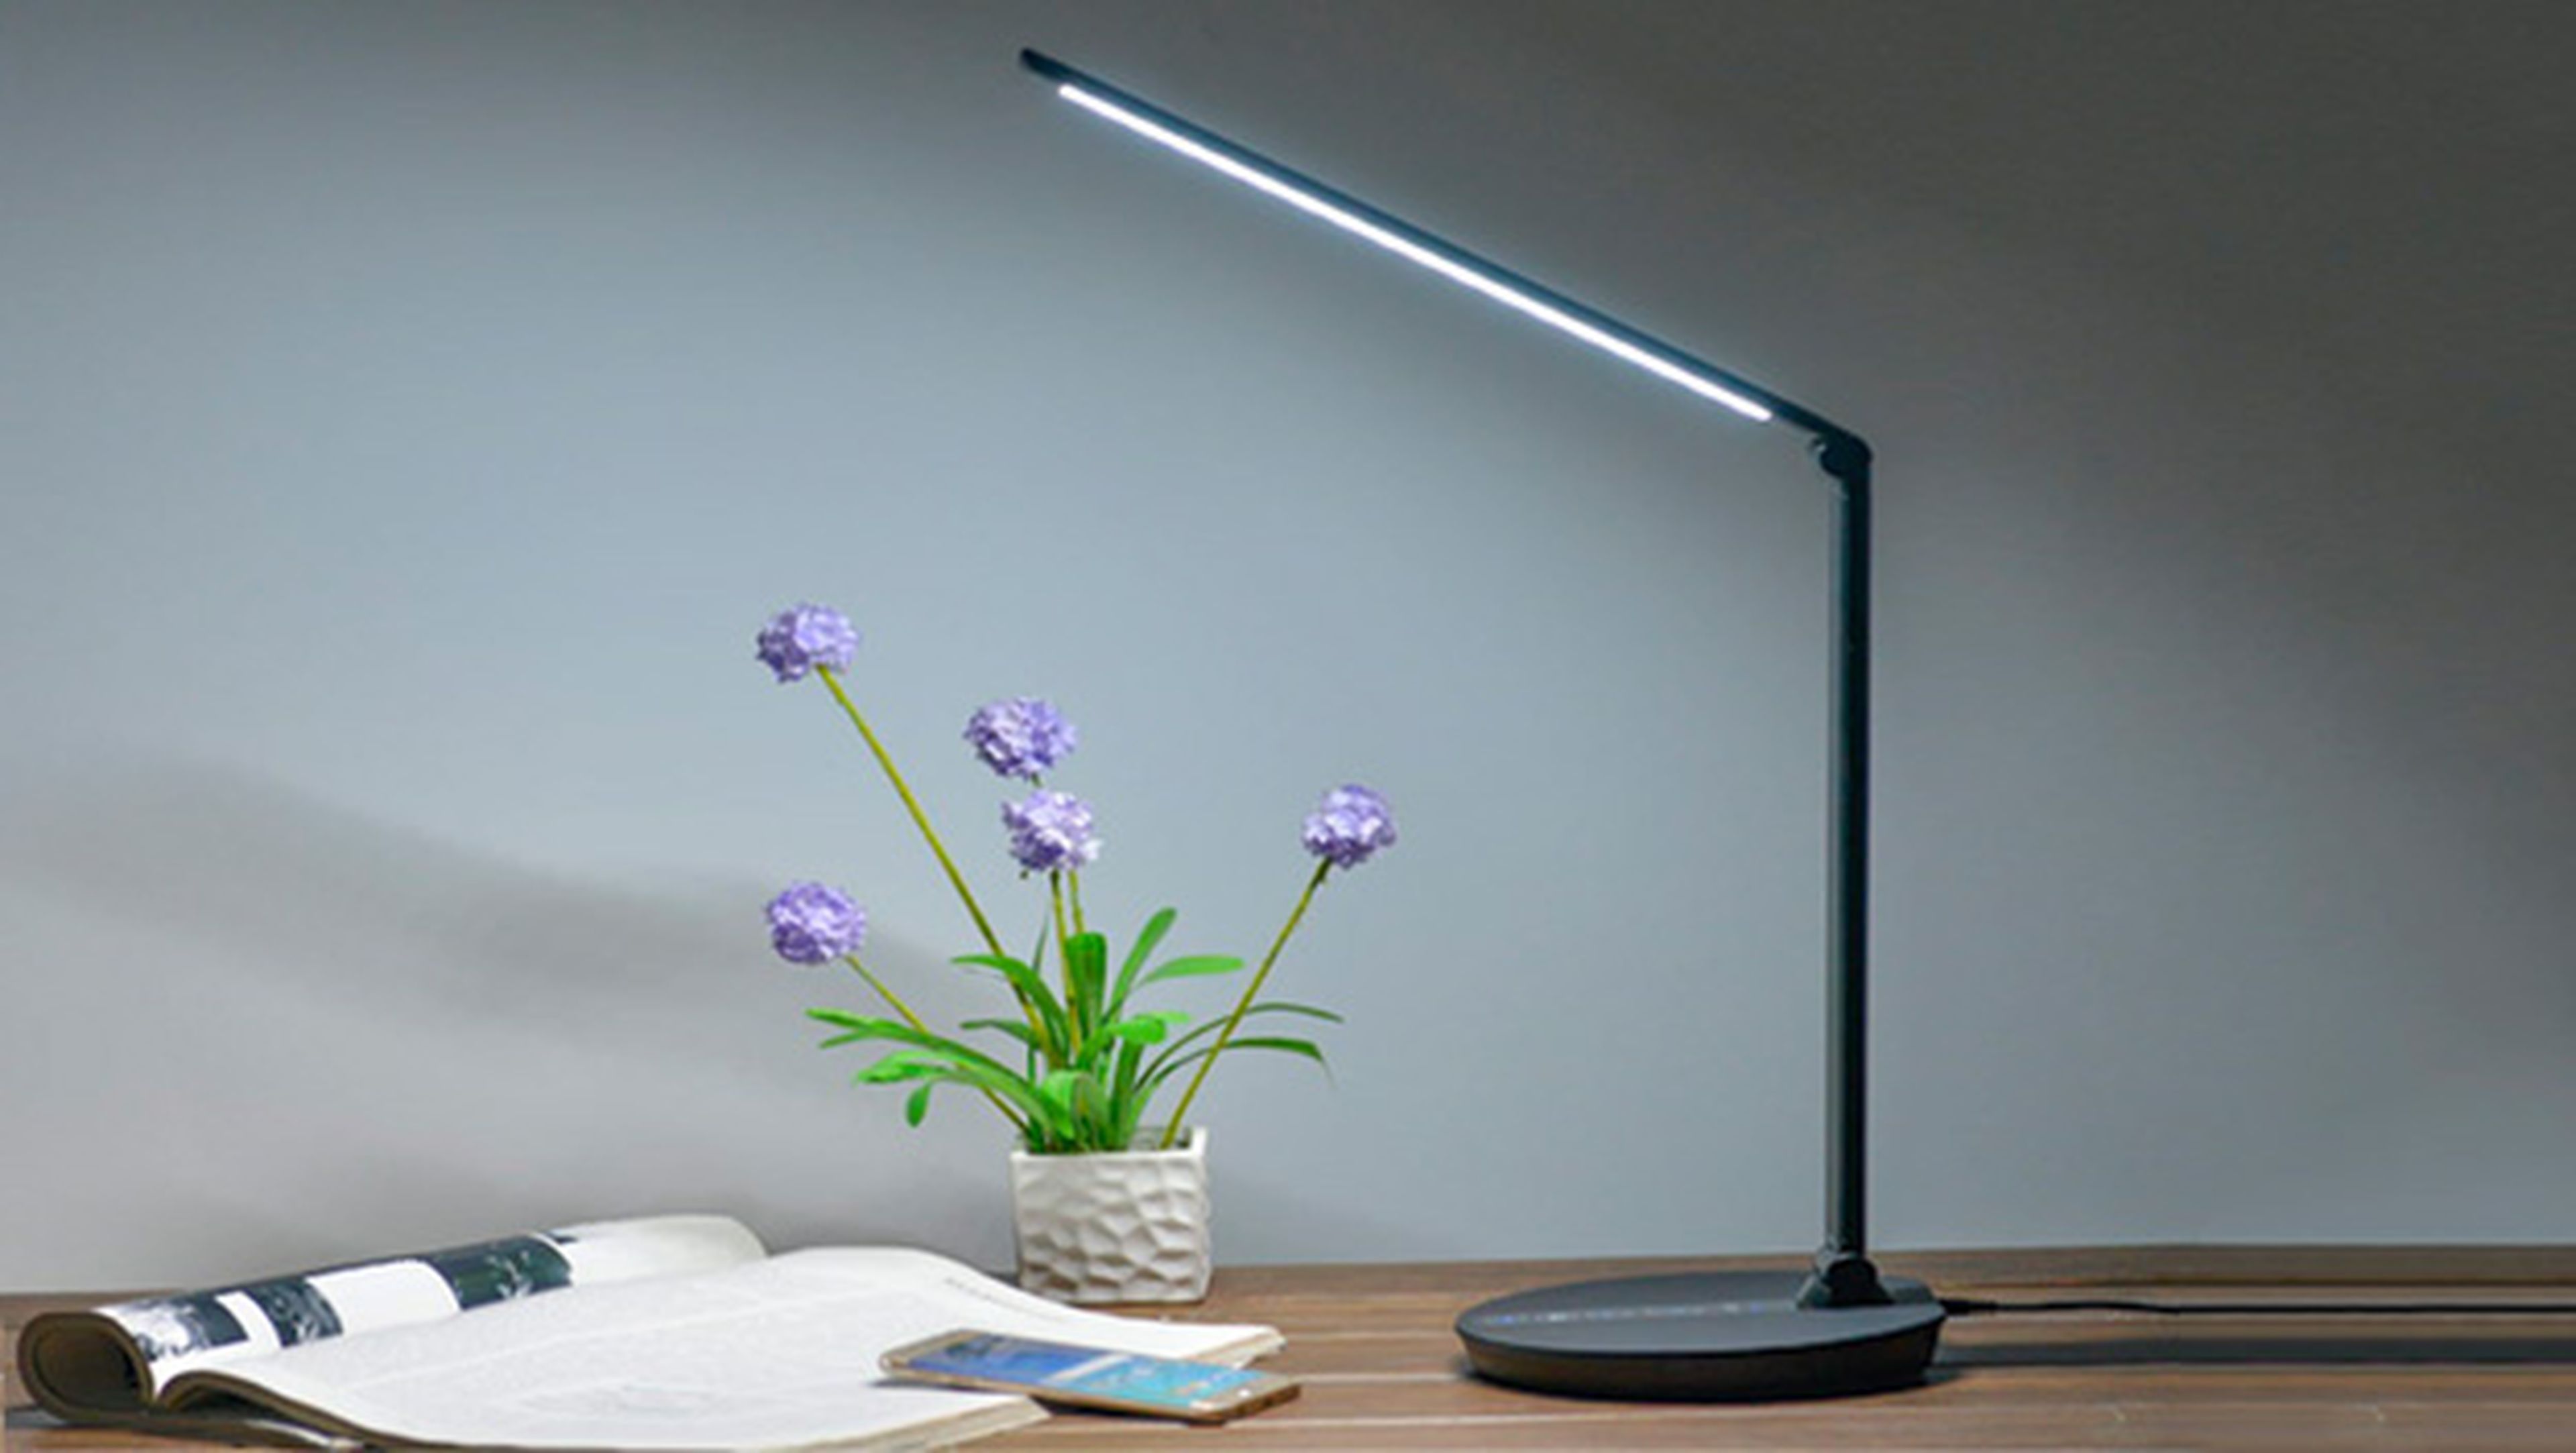 Lámpara LED de ANNT, flexo de escritorio que cuida tus ojos